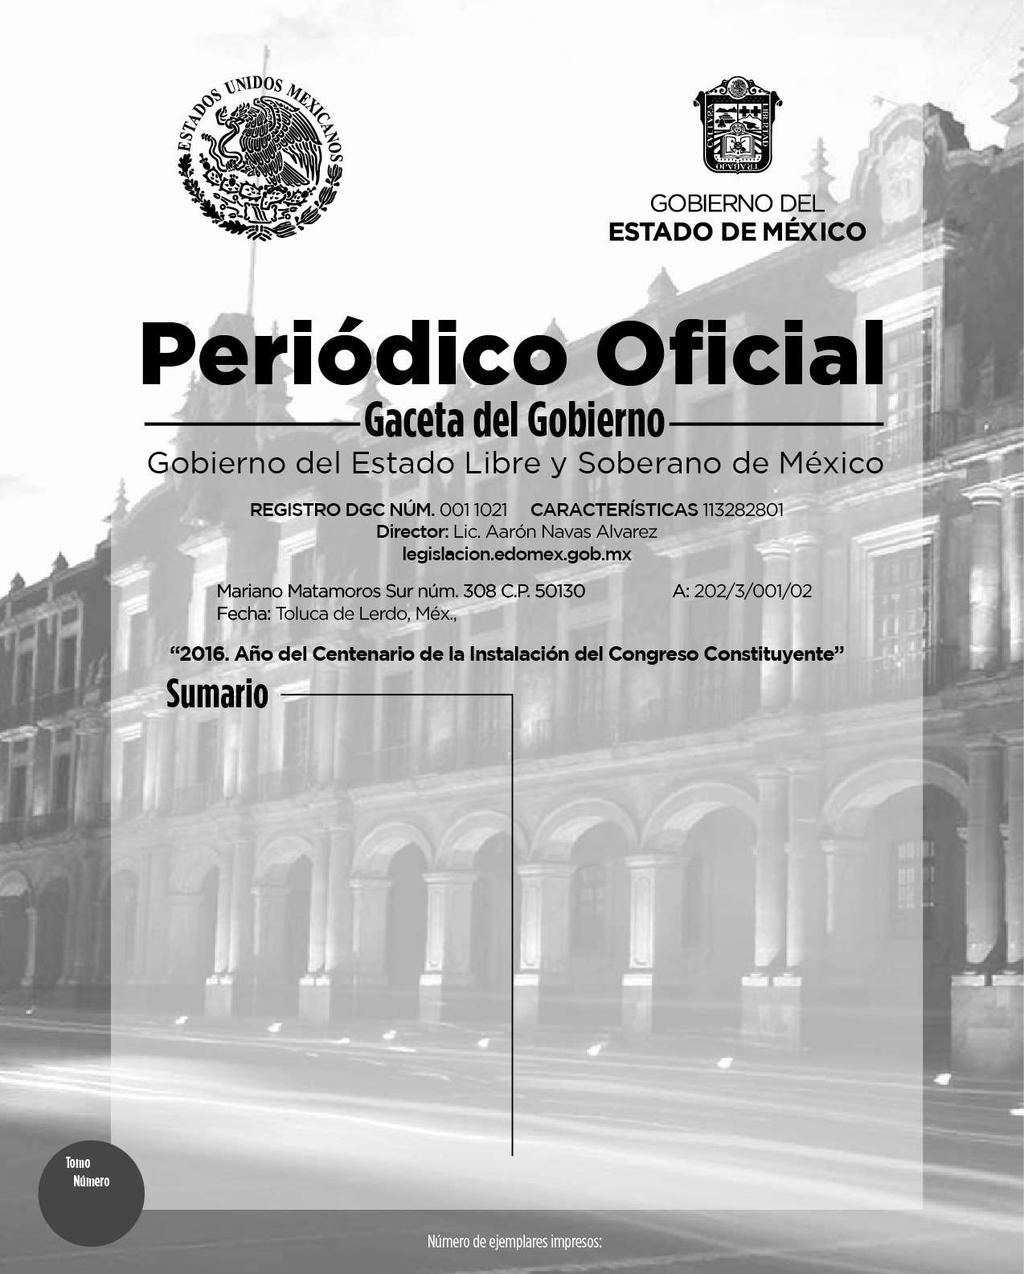 lunes 15 de febrero de 2016 PODER JUDICIAL DEL ESTADO DE MÉXICO CIRCULAR No. 10/2016.